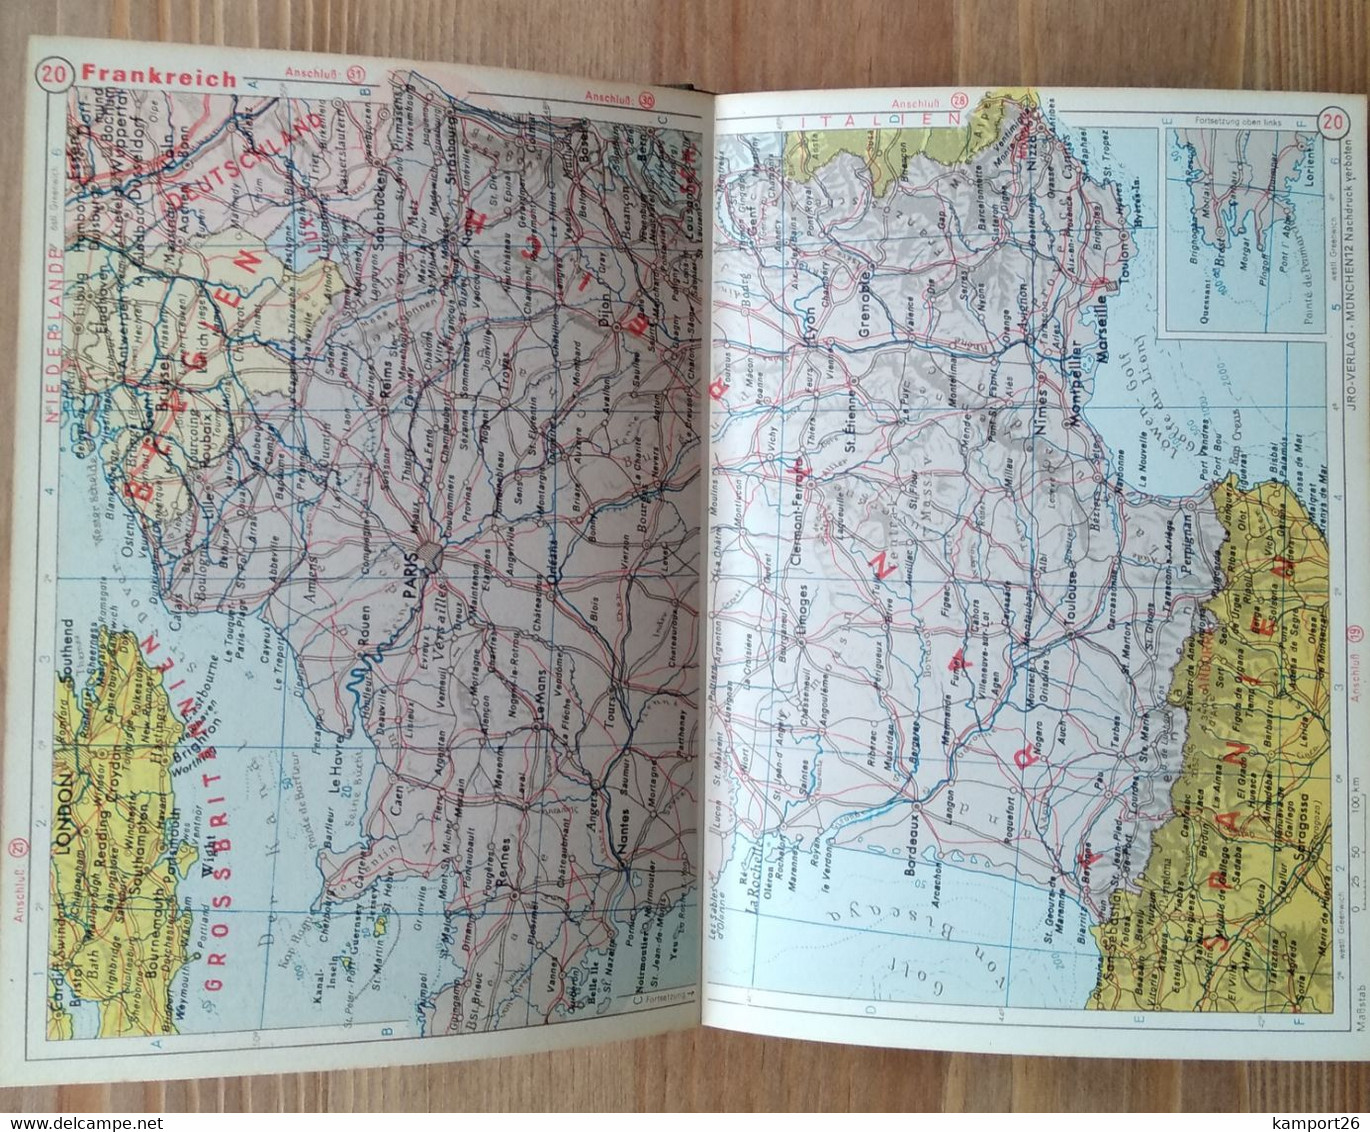 1959 TASCHENATLAS Ernst Kremling CARL PRIOR Illustrated ATLAS Geographic 29rd Edition Maps - Maps Of The World